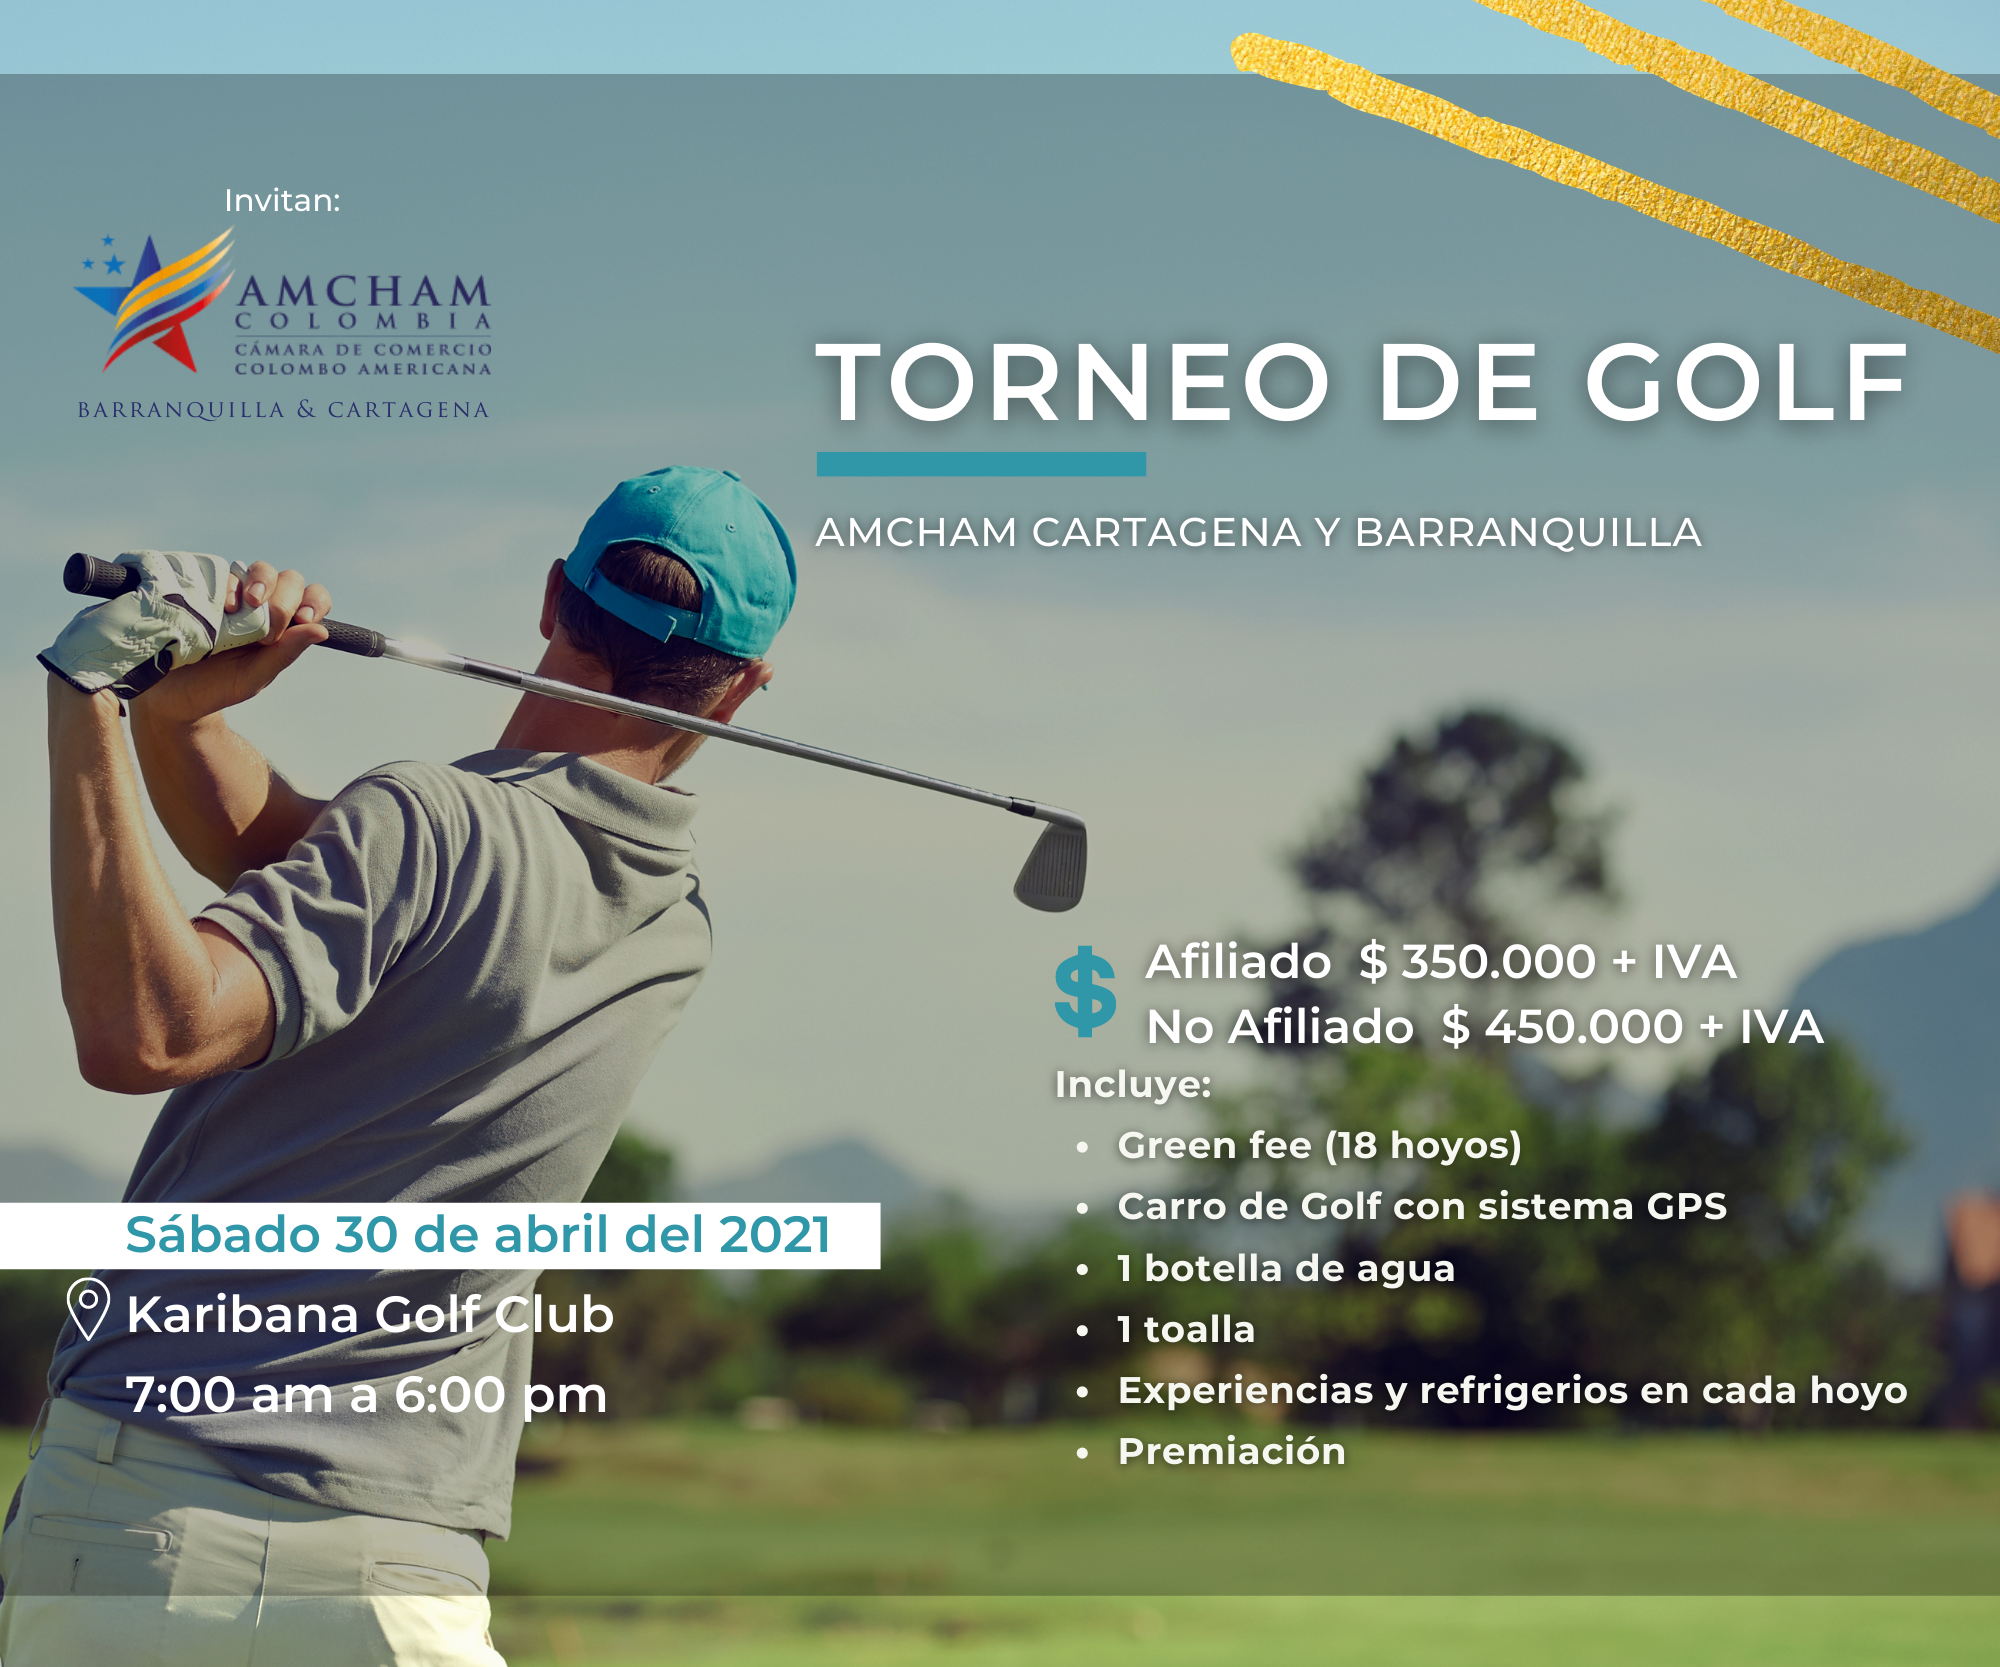 Torneo de Golf AmCham Cartagena